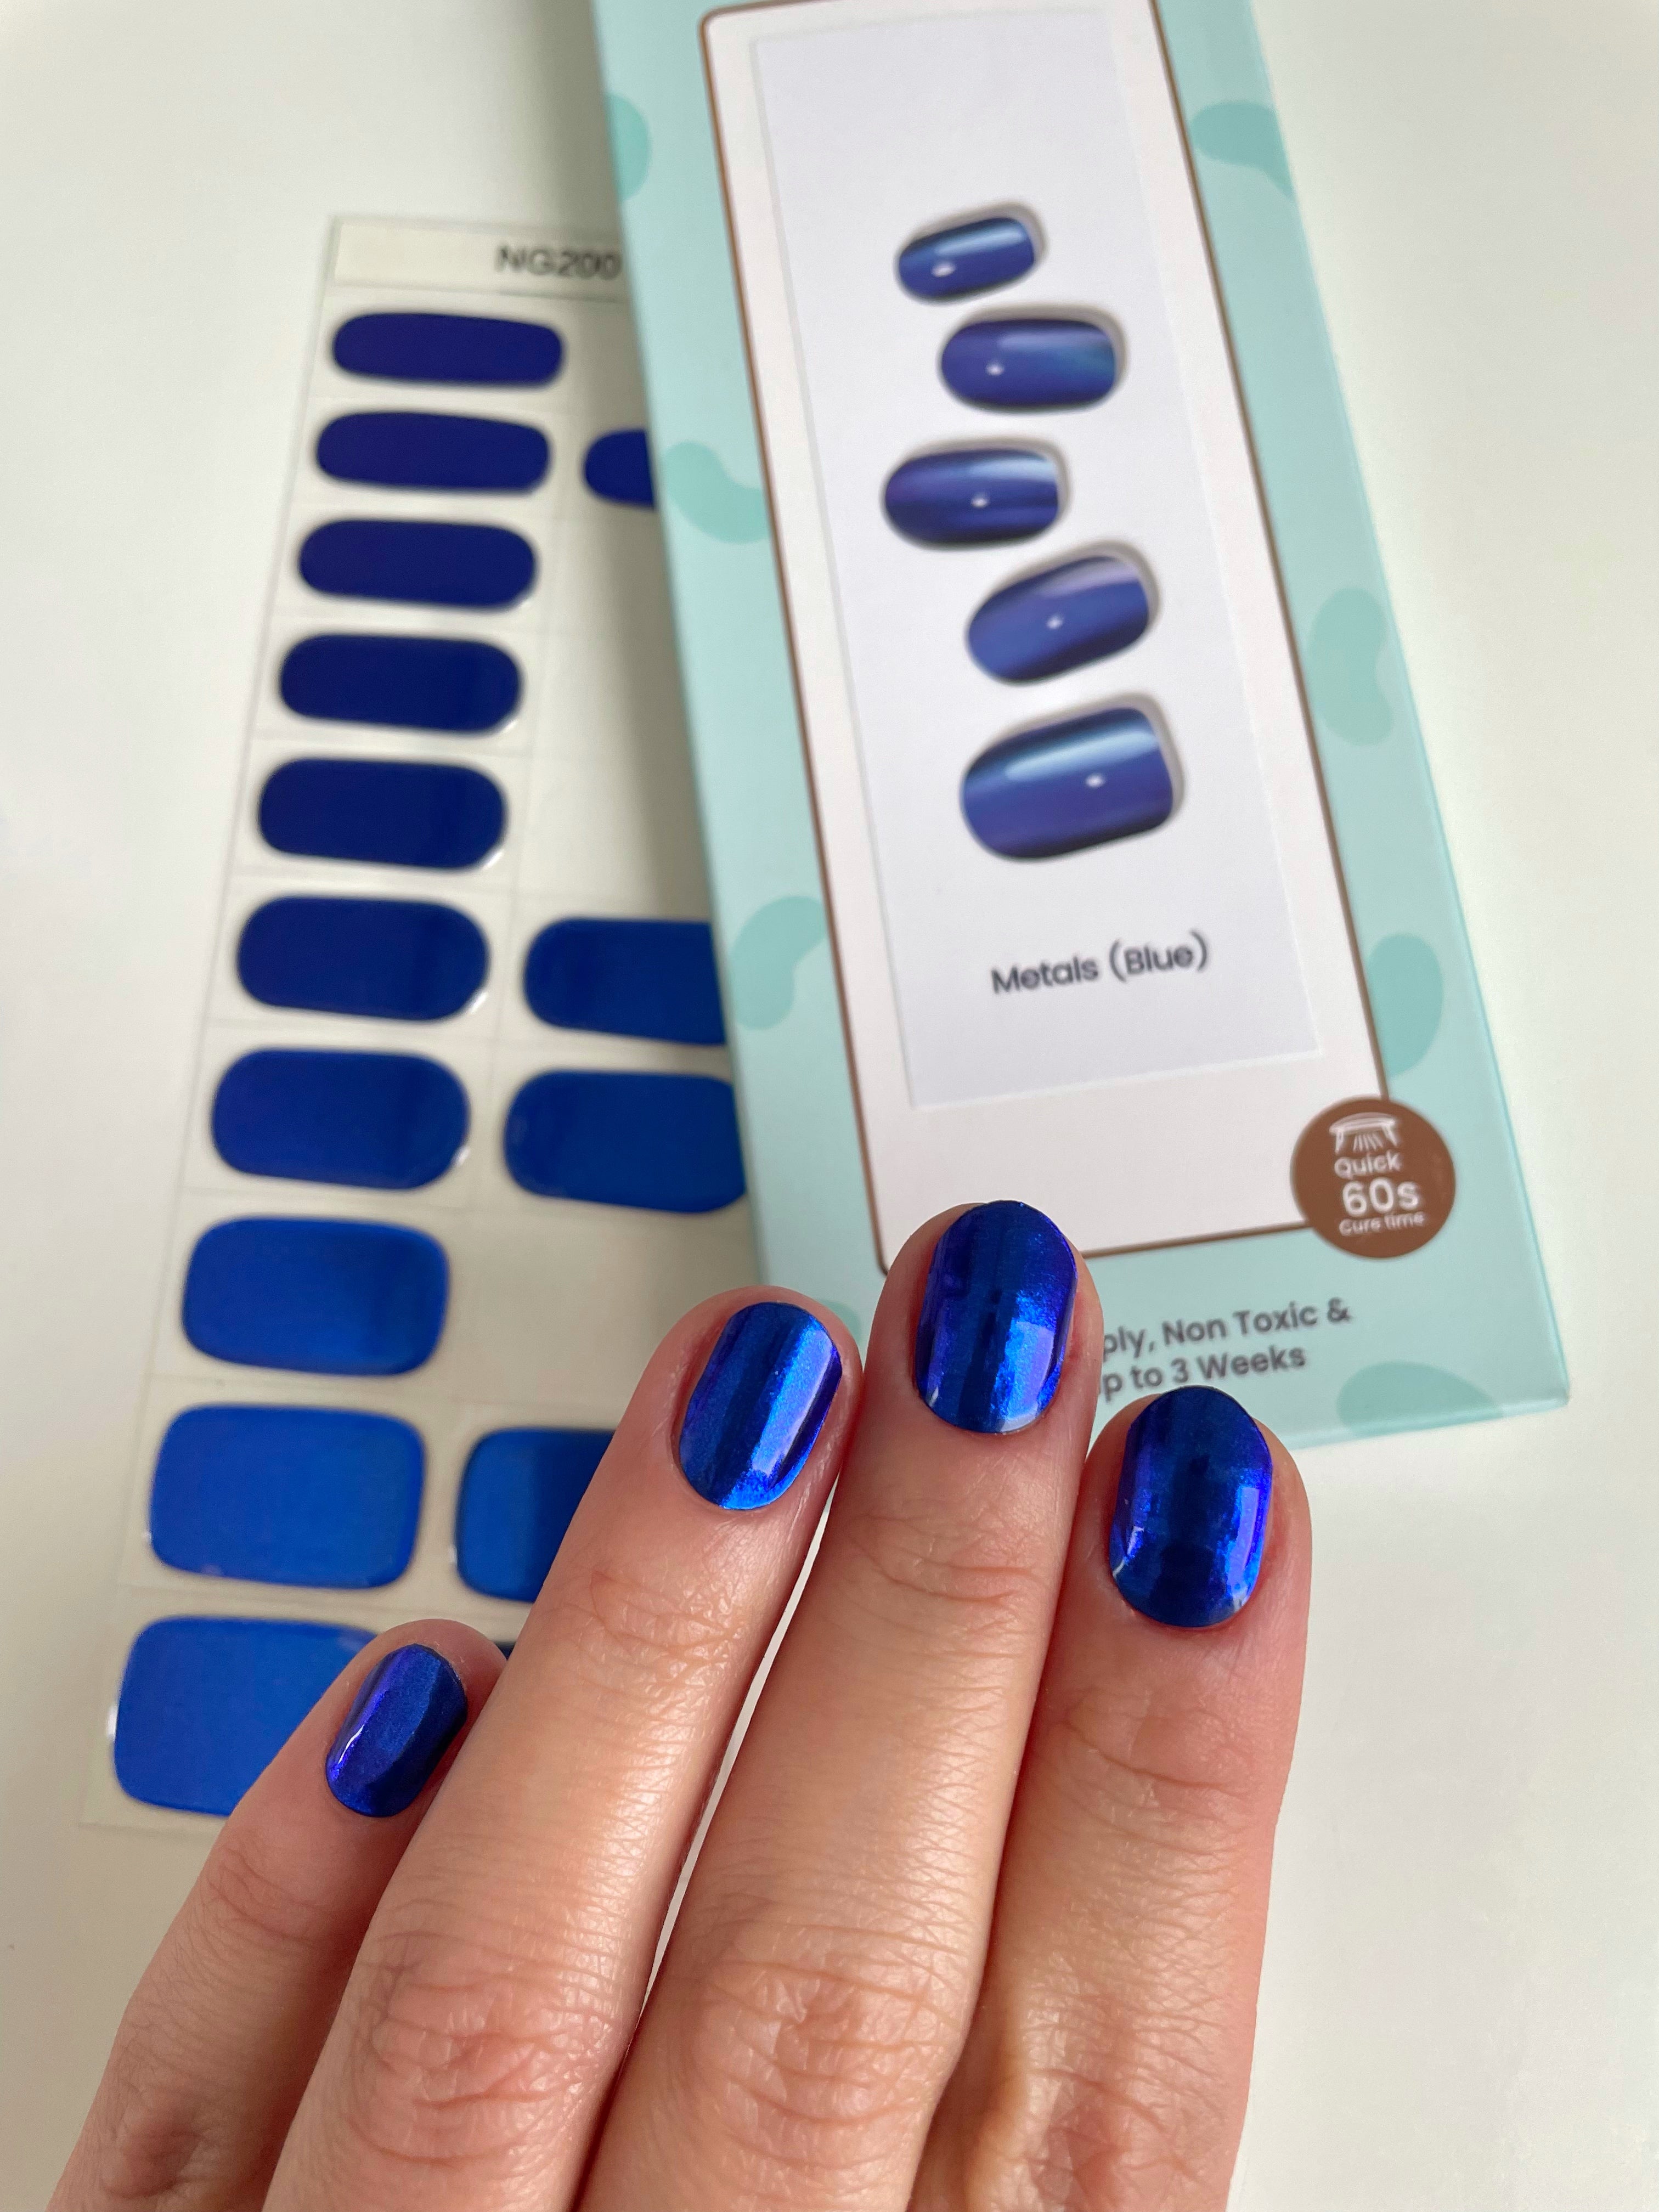 Metals (Blue) Super Jellies DIY Semi Cured Gel Nail Wraps